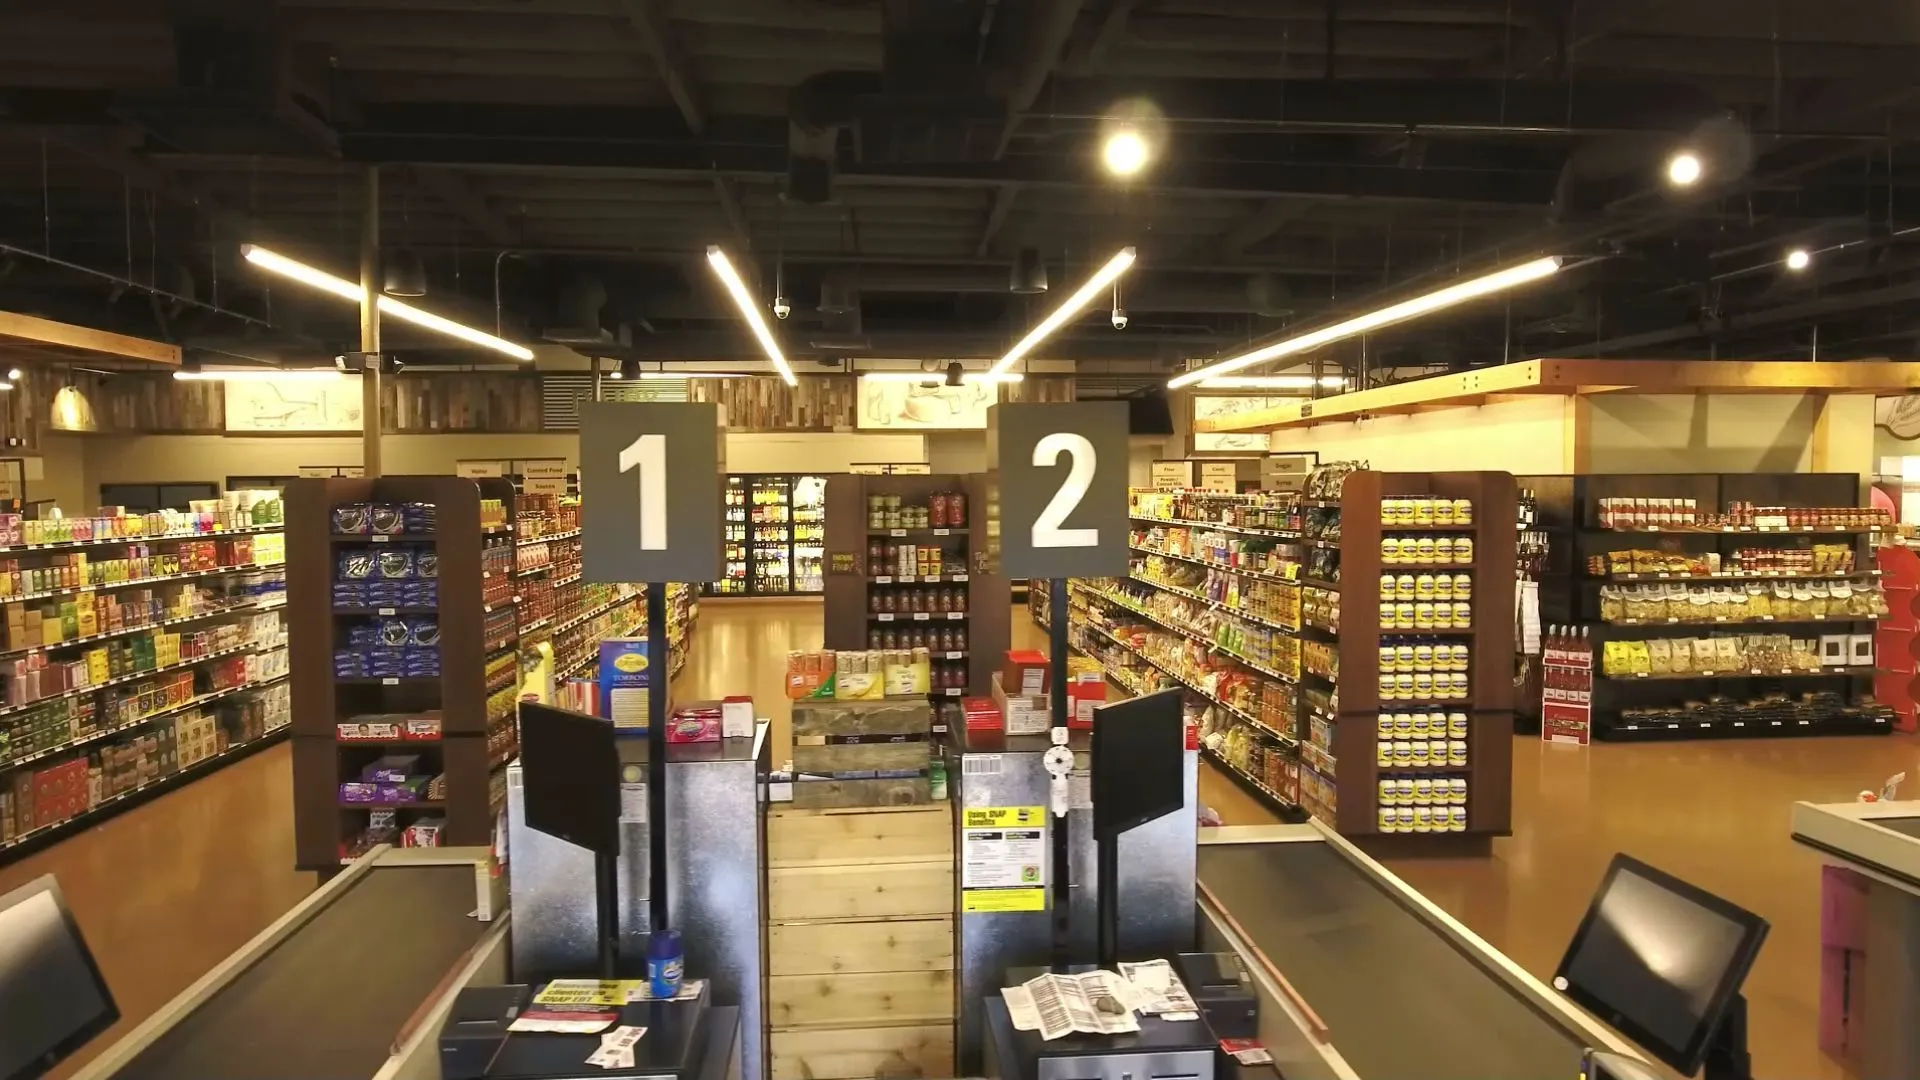 Empty shelves in supermarket - company cites 